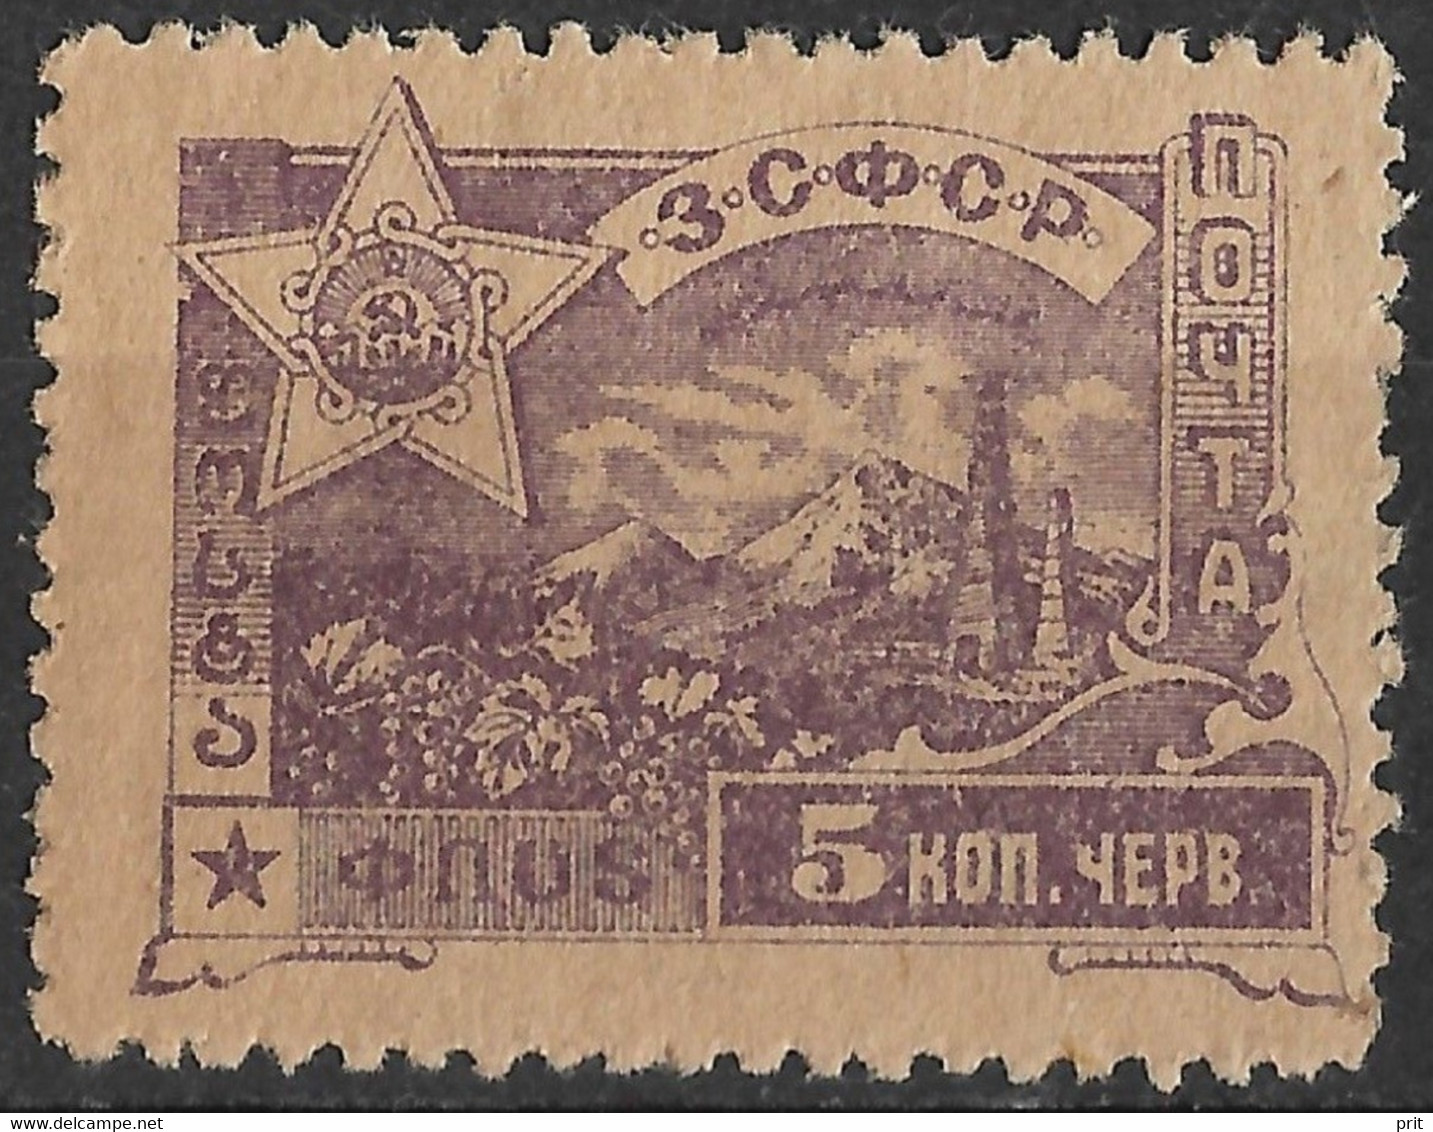 Transcaucasian Federated Republics, Russia 1923 5K Ararat Mountain & Oil Fields. Michel 31. MH. - Federative Social Soviet Republic